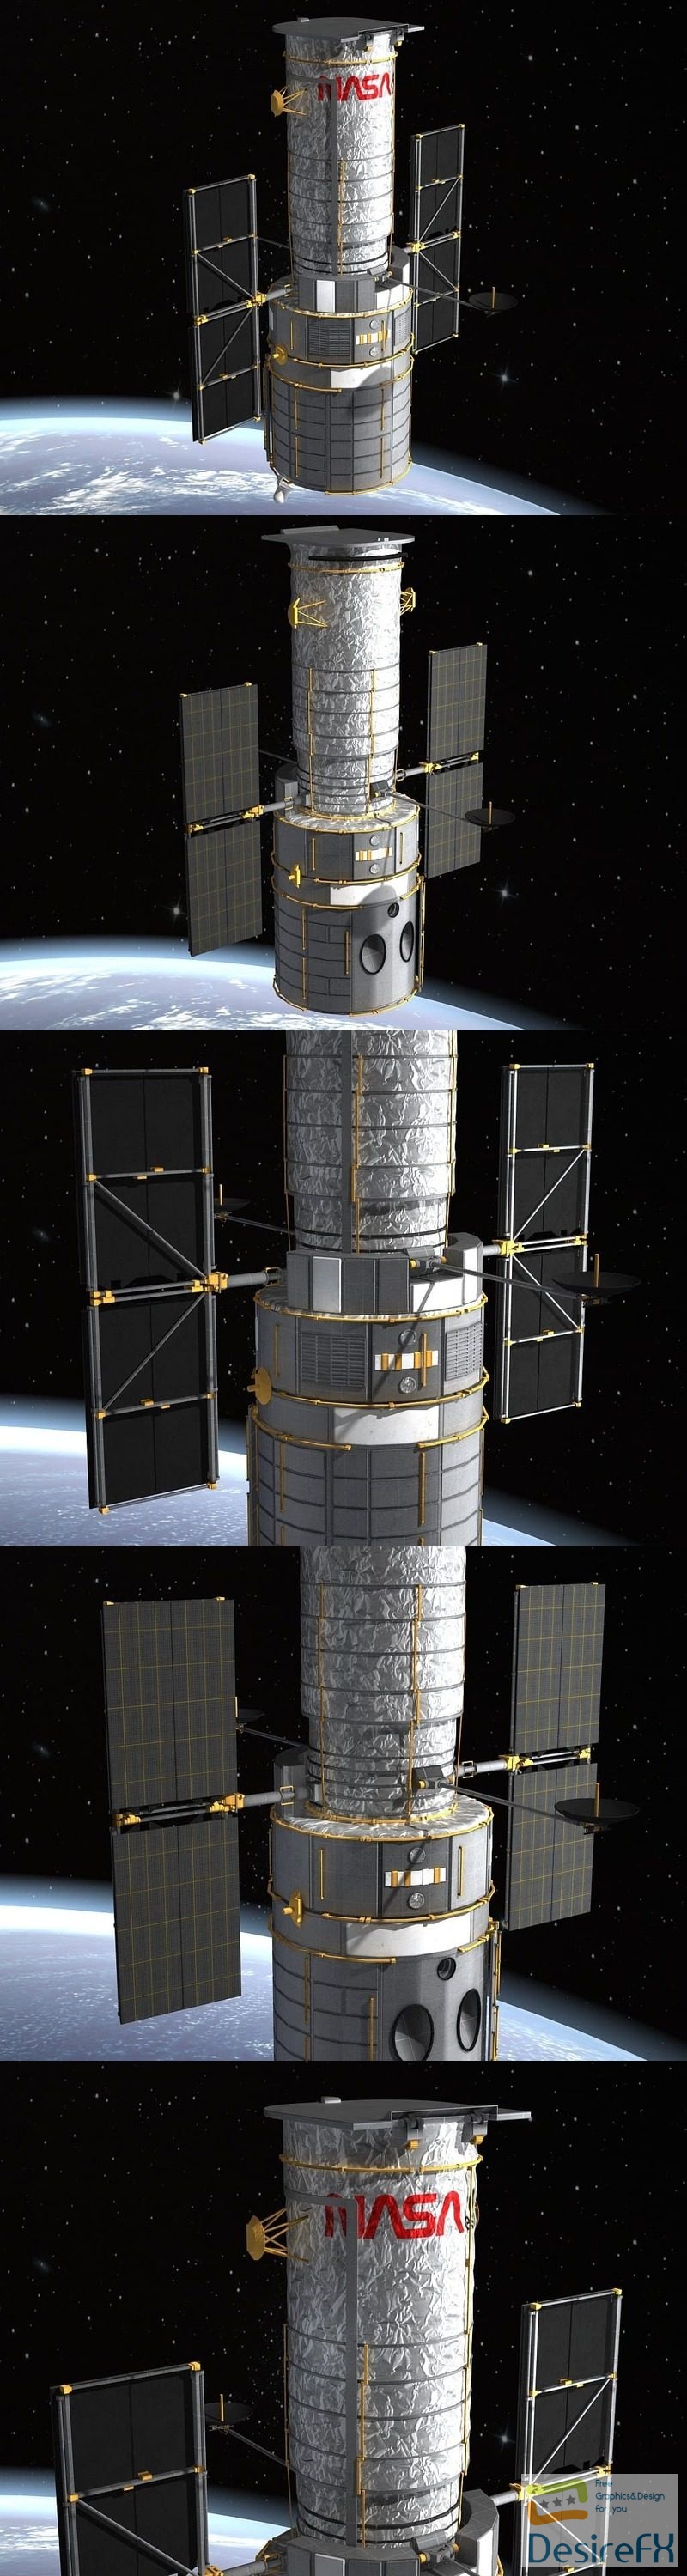 Hubble Space Telescope 3D Model